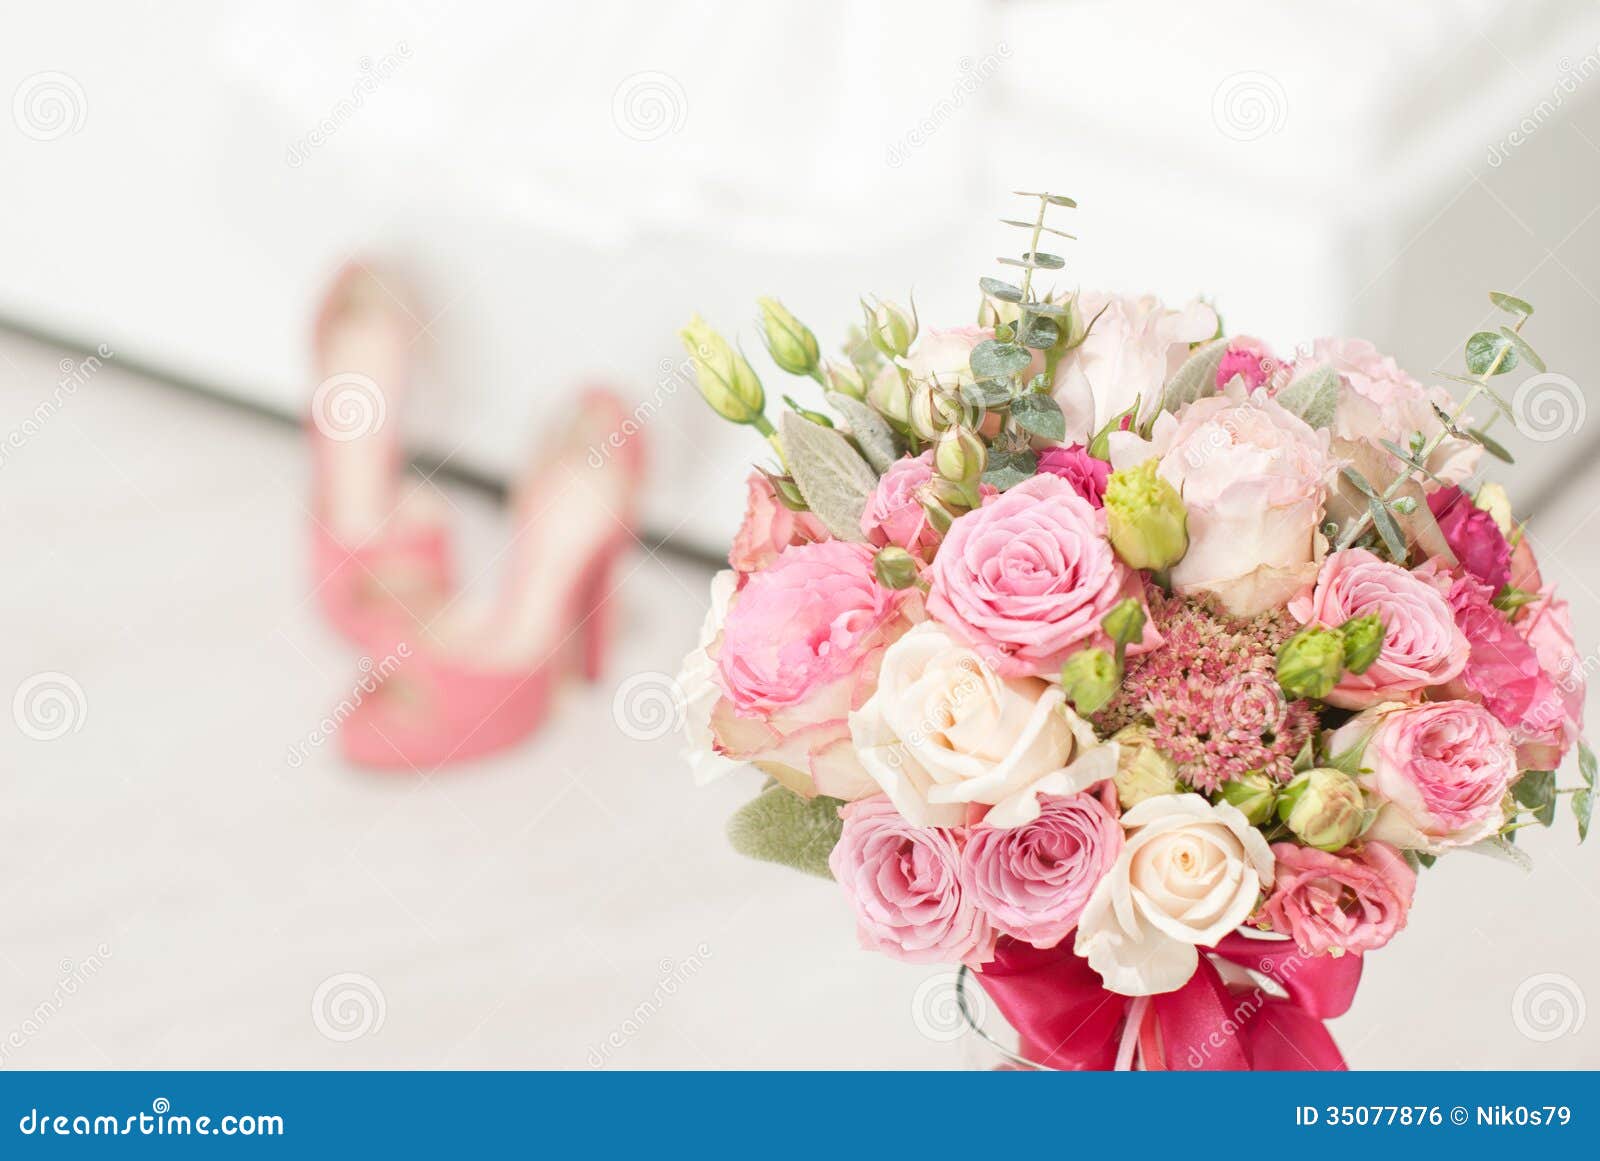 Flower wedding backgrounds